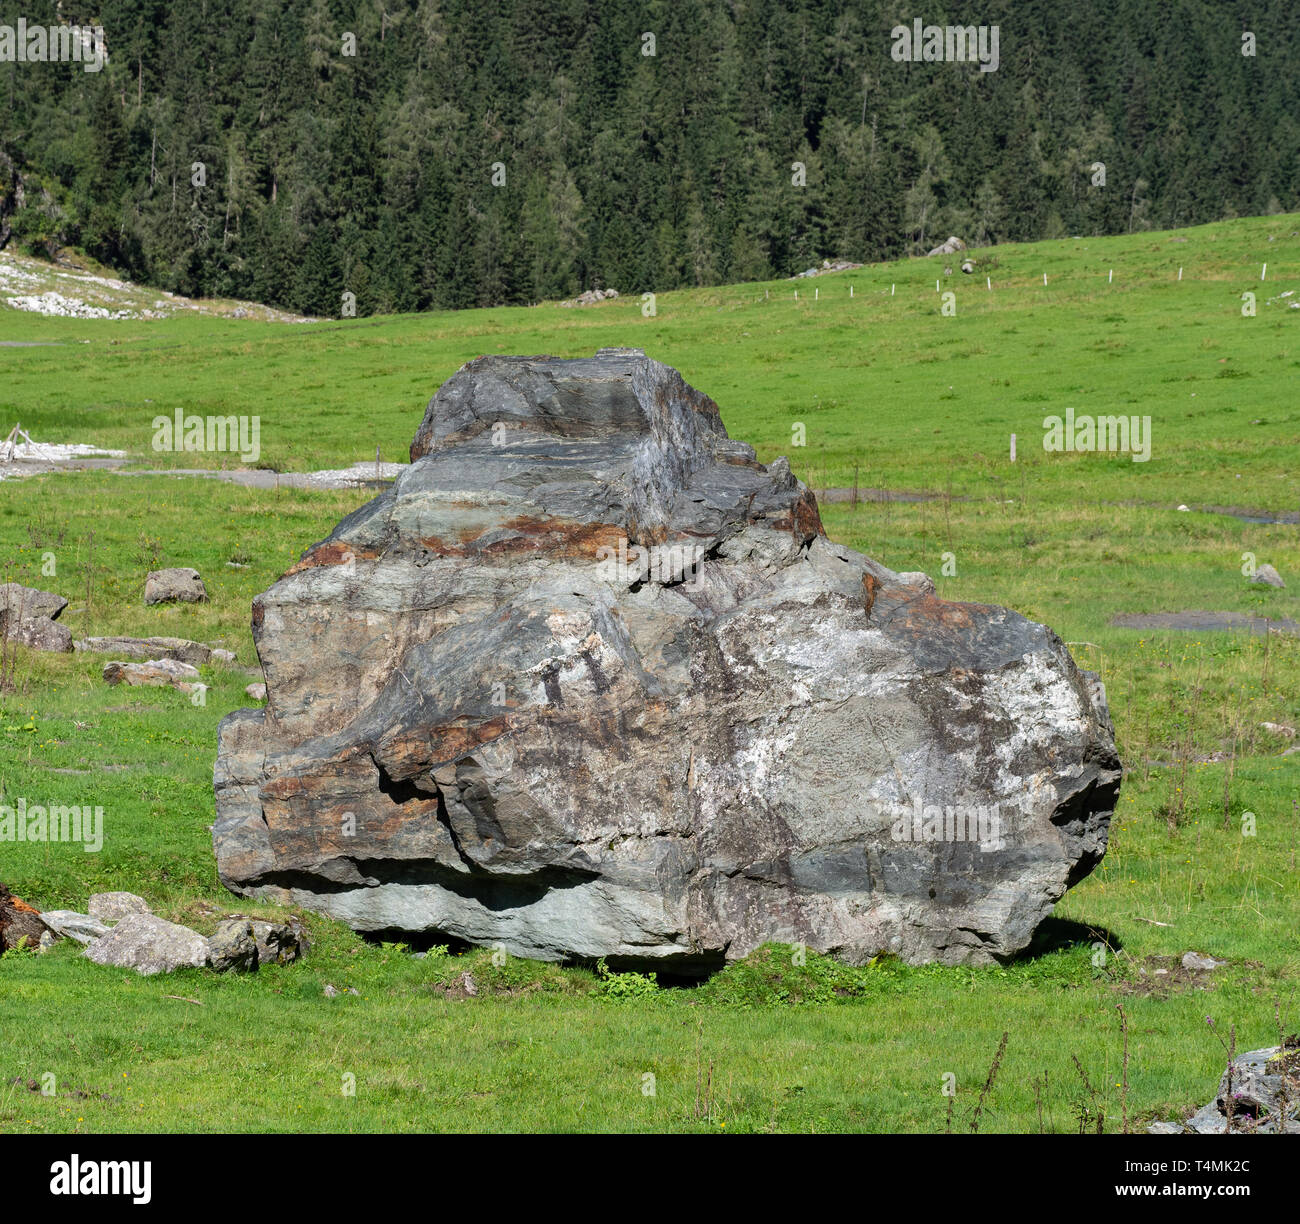 Big rock on pasture Stock Photo